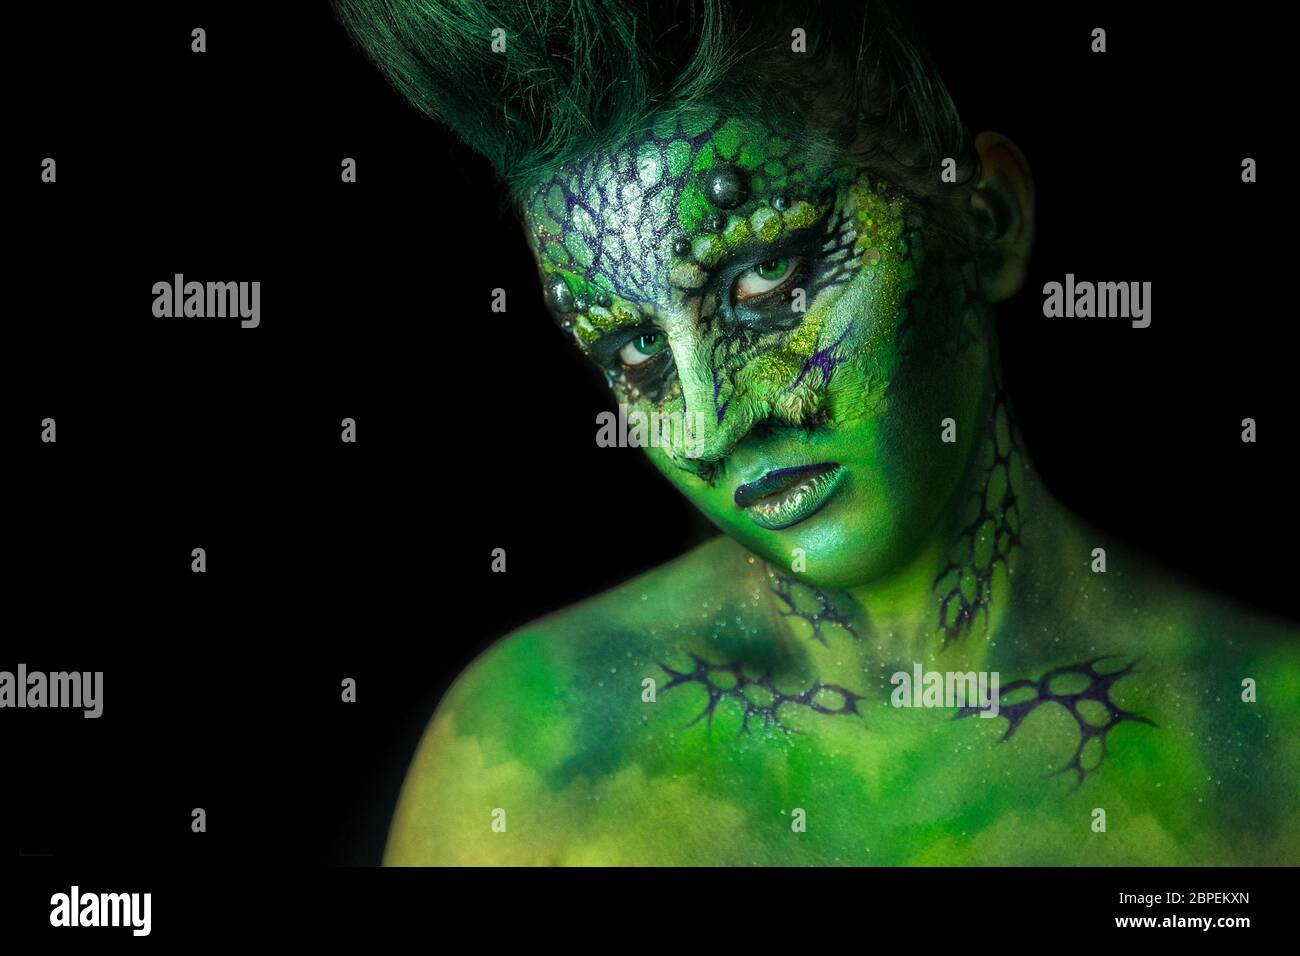 Fantastic Reptilian Girl. Creative Make up like Alien or Superhero Movie. Stock Photo